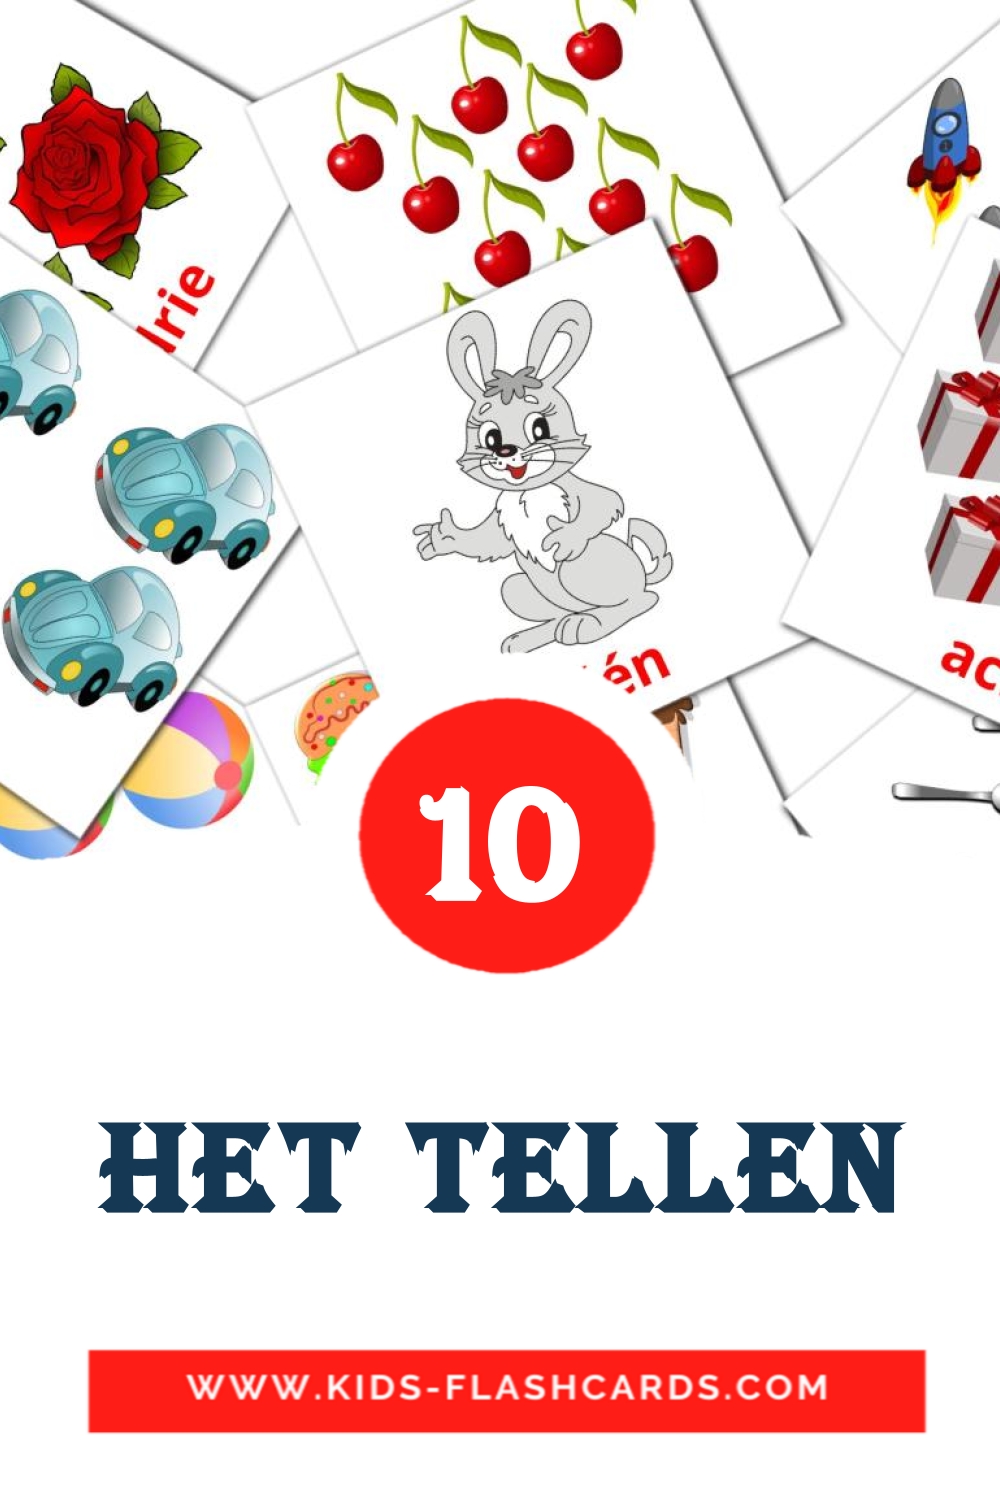 10 tarjetas didacticas de Het tellen para el jardín de infancia en holandés